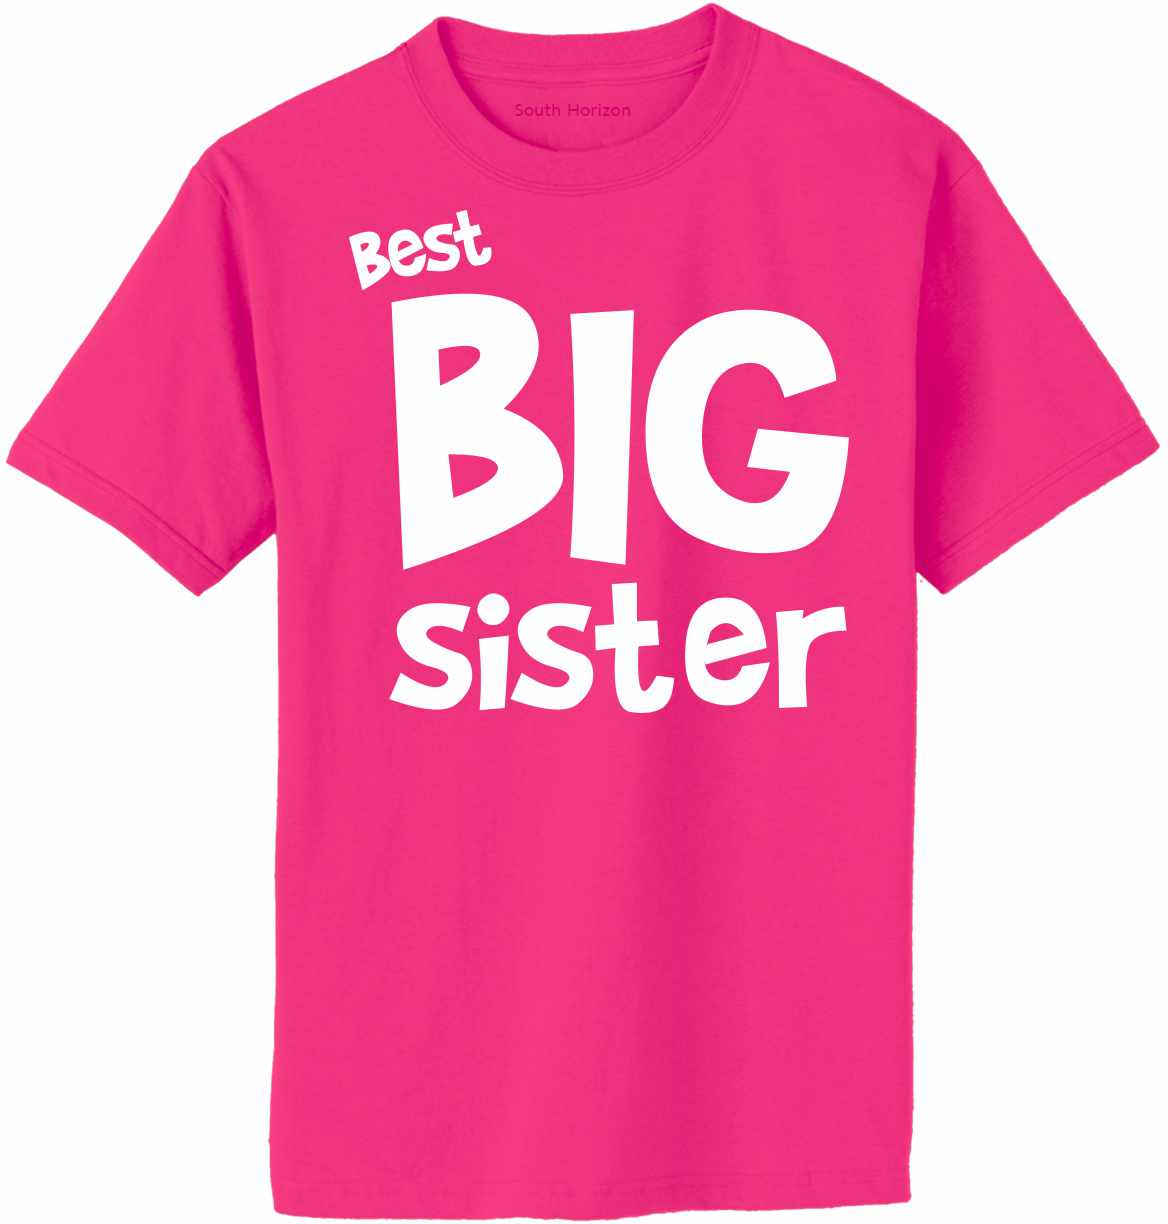 Best Big Sister Adult T-Shirt (#1139-1)